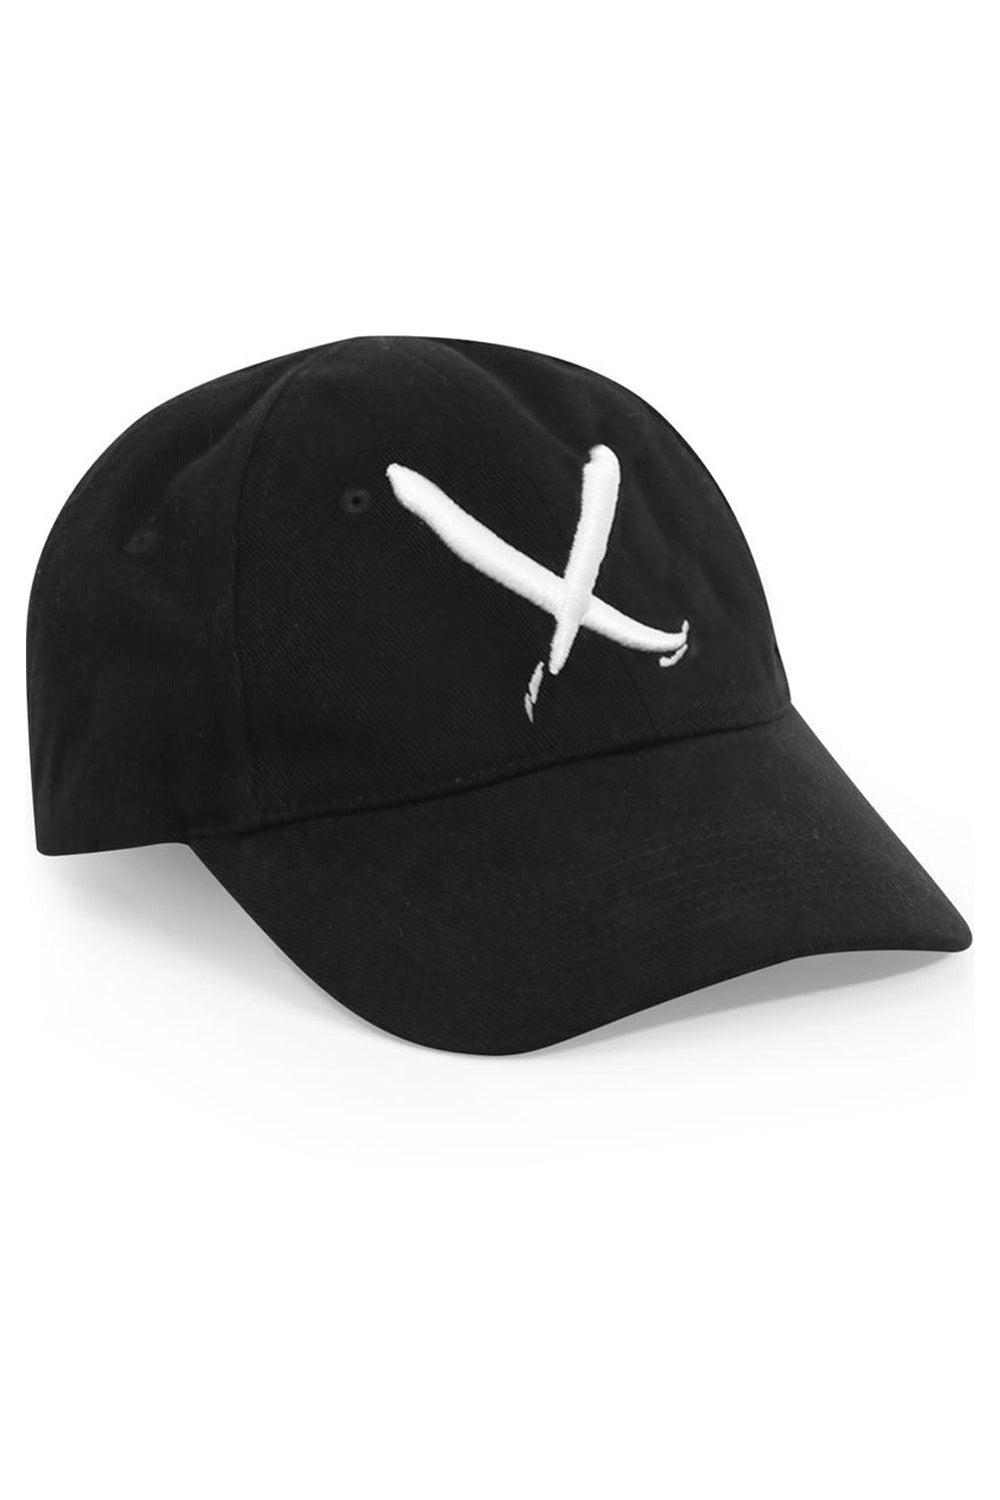 PARLOUR X ACCESSORIES BLACK THE 'X' CAP BLACK/WHITE